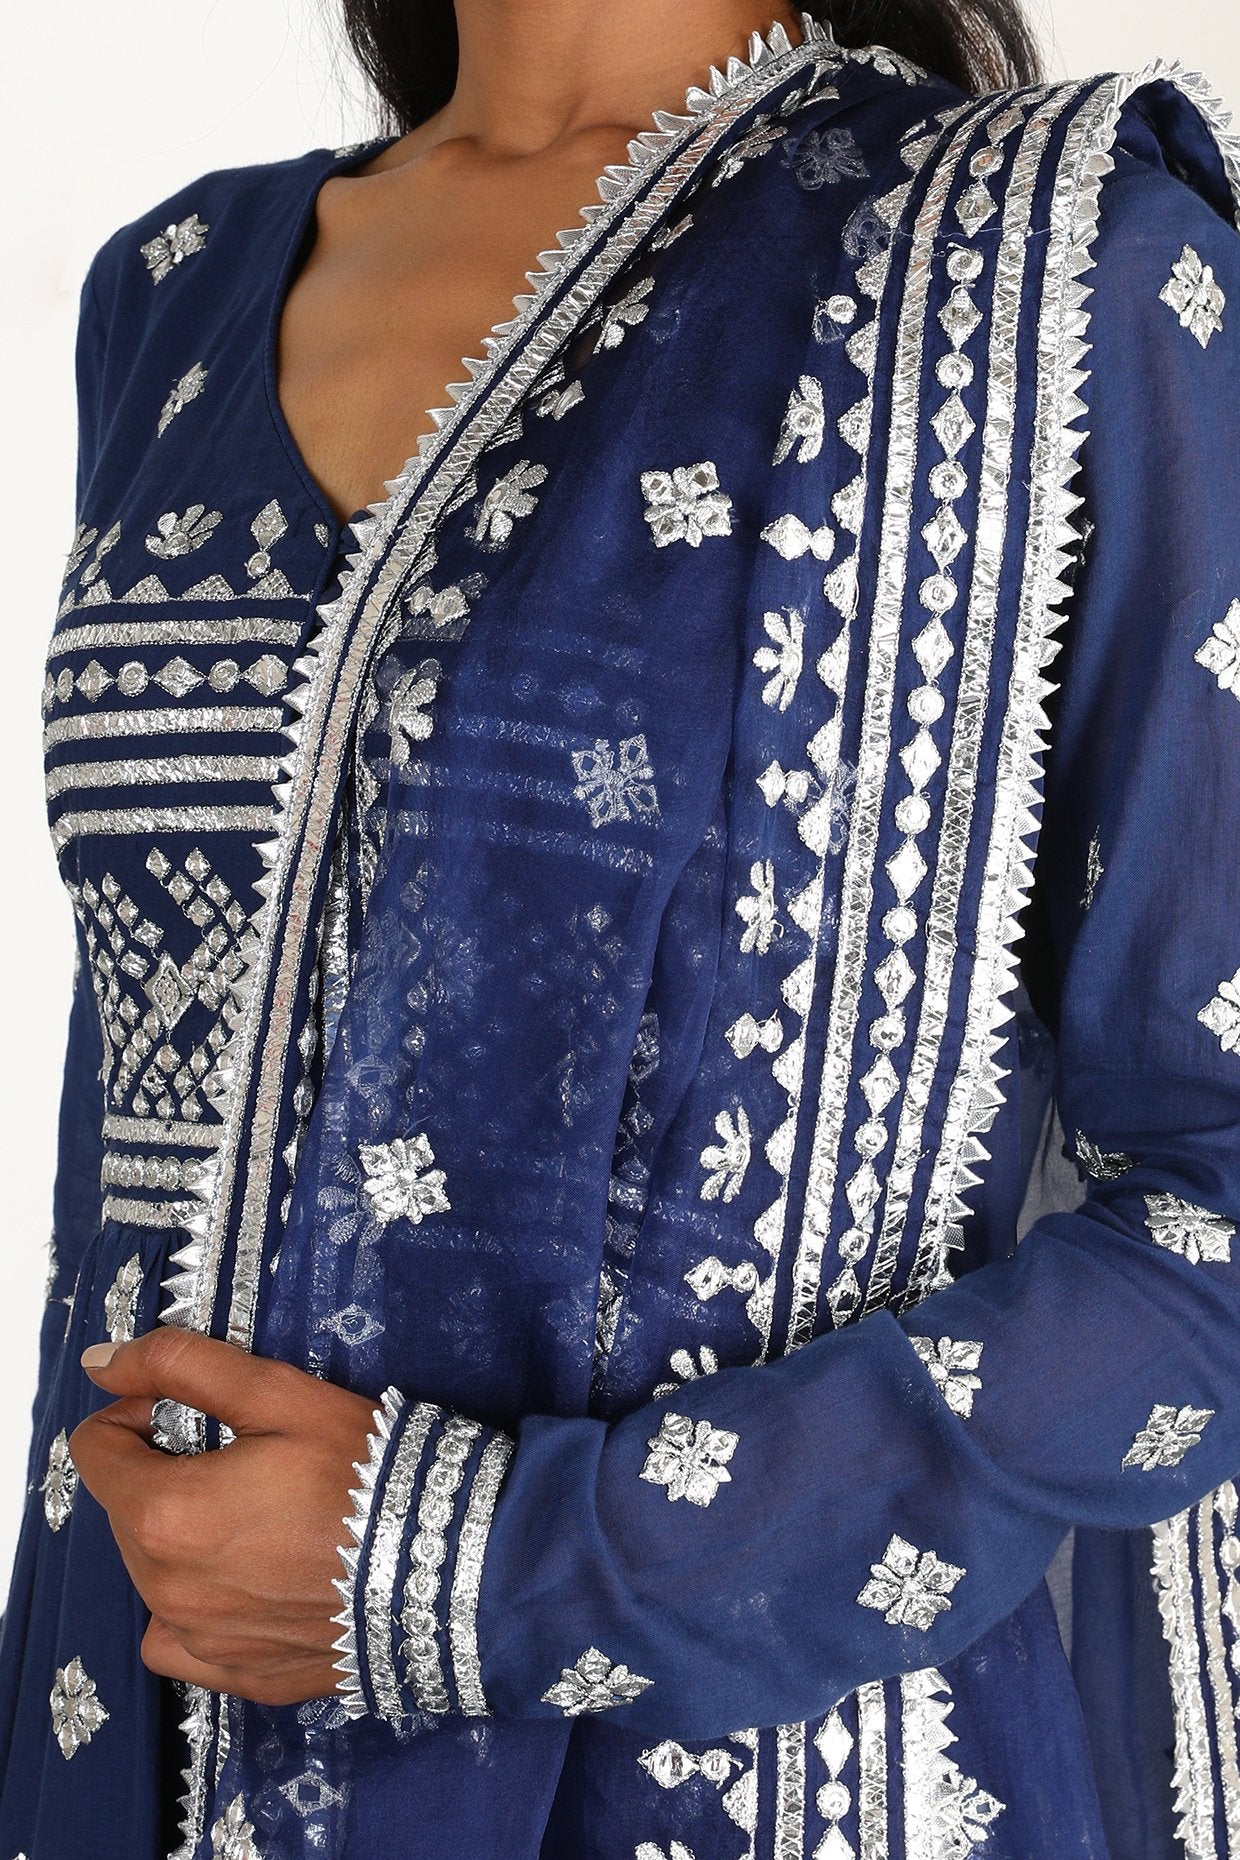 Gopi vaid - Sitara - Chand tiered anarkali-set- Indian Designer wear Online Shopping